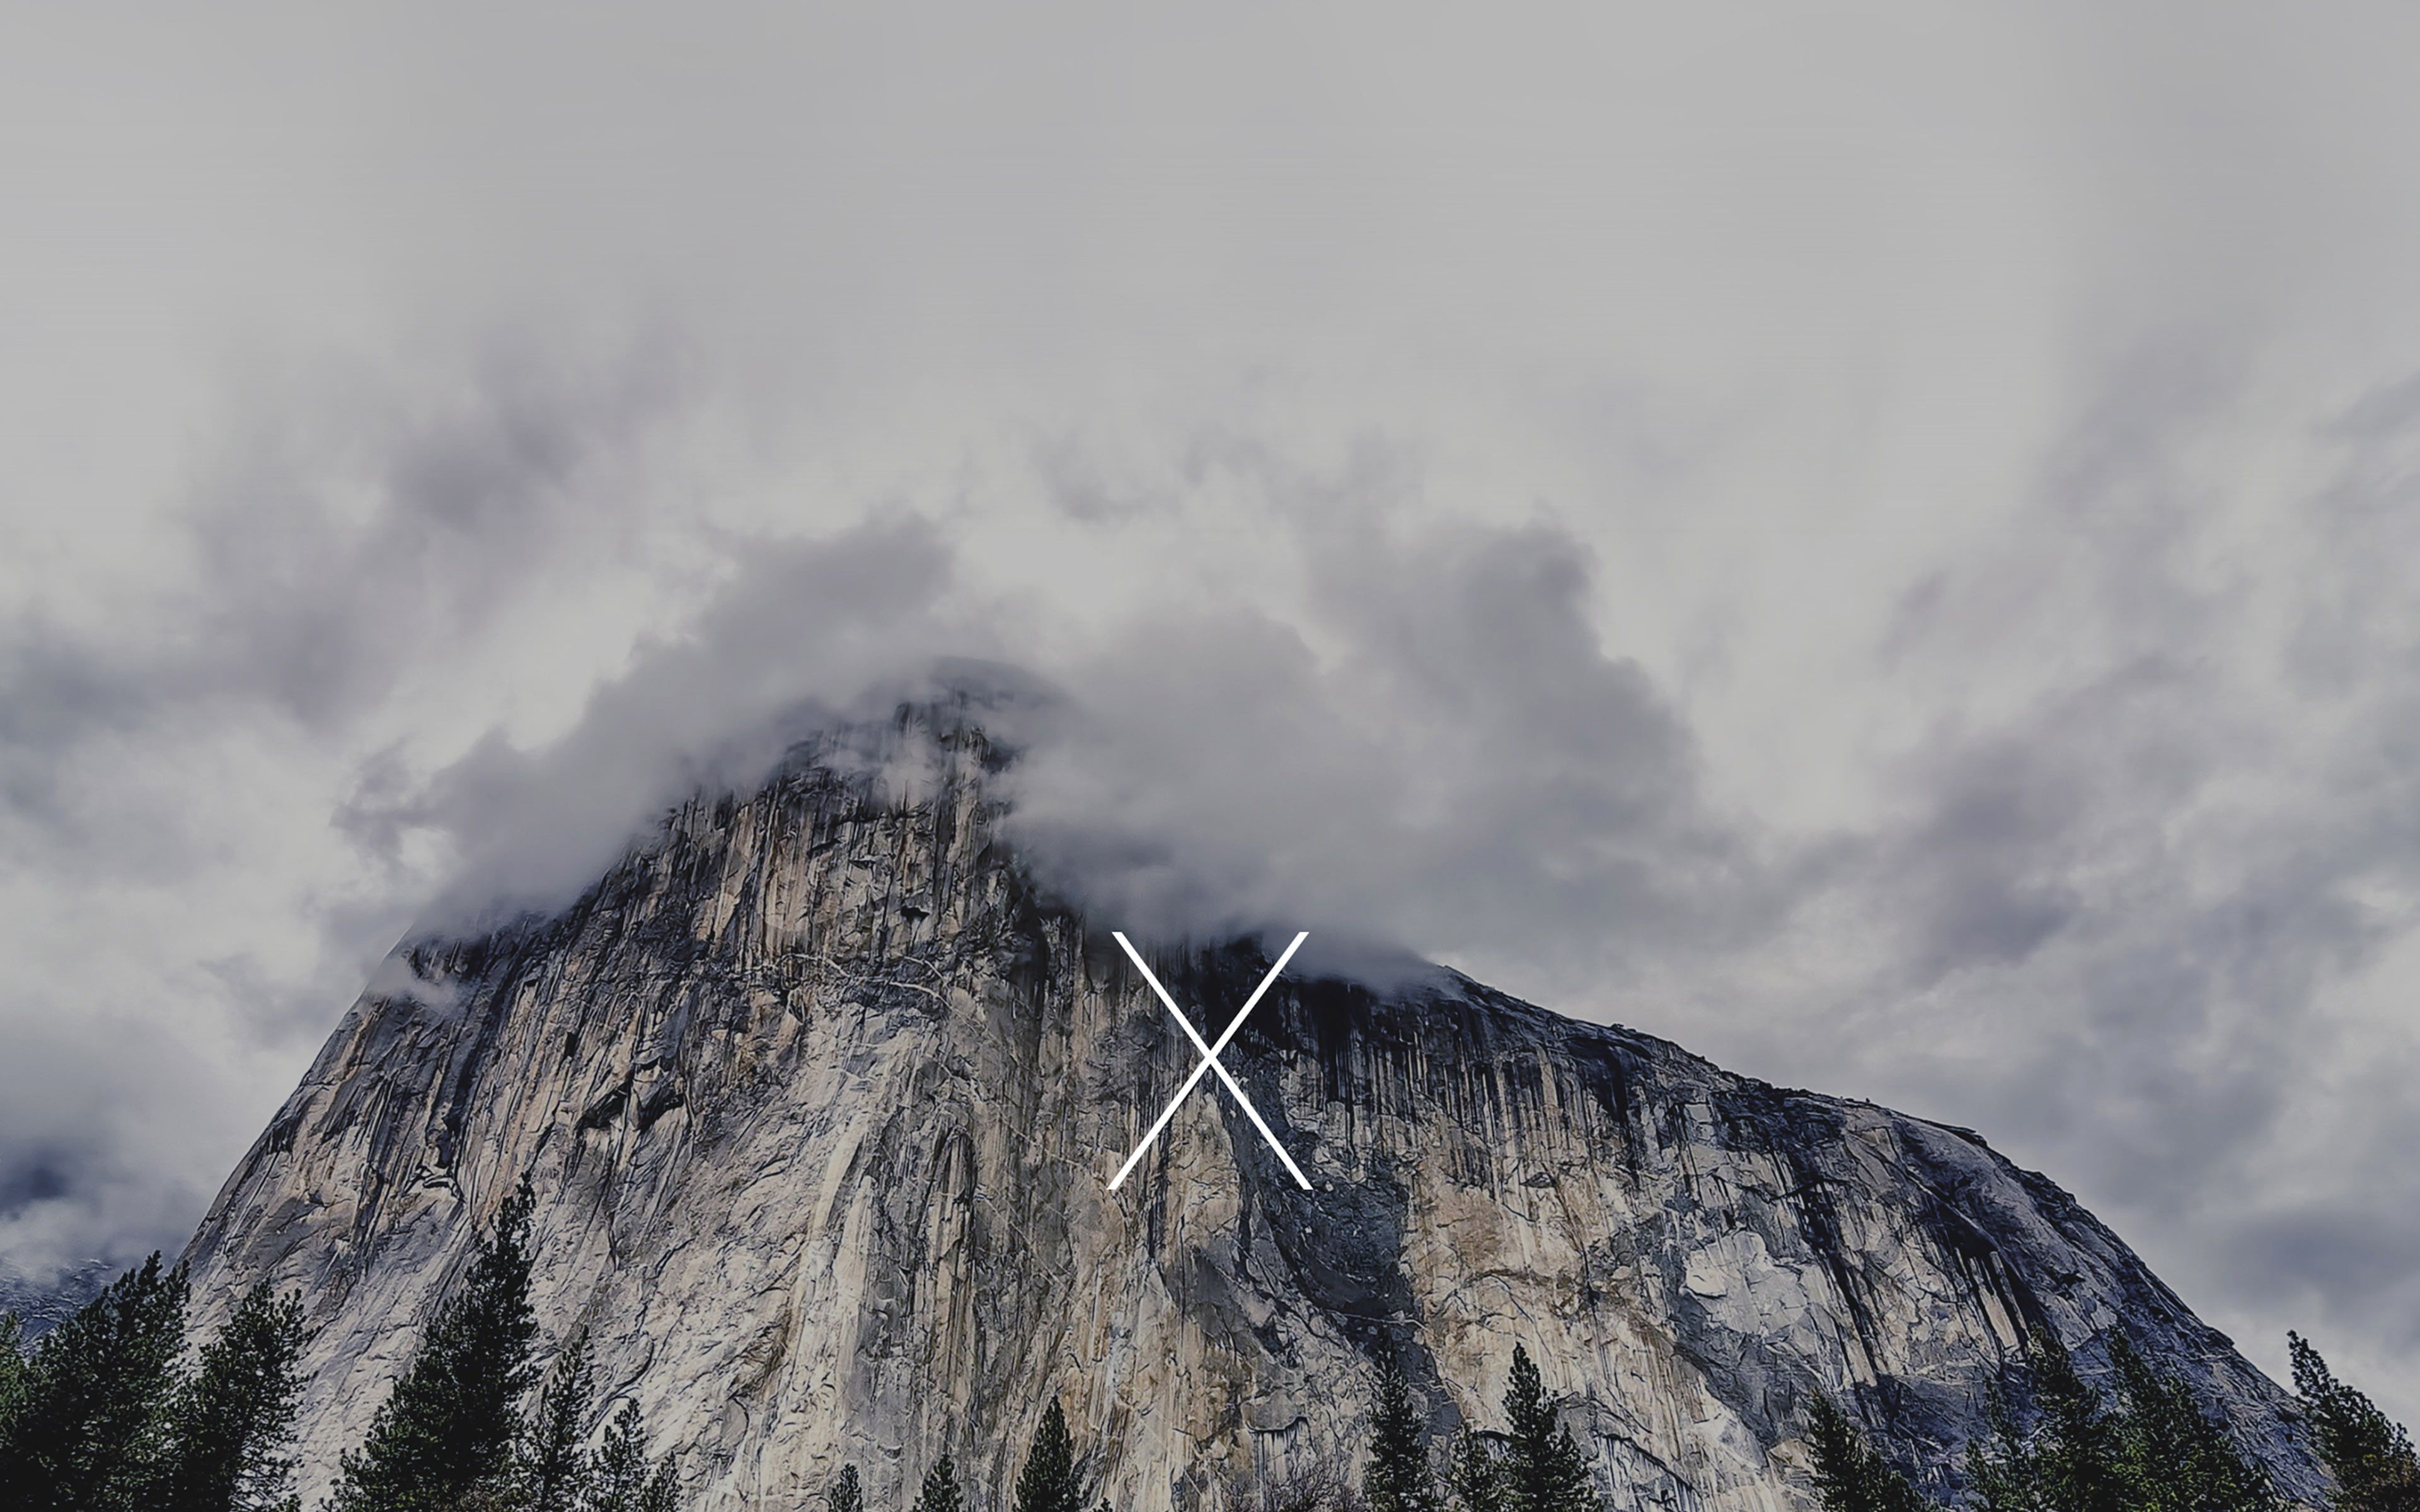 Apple Yosemite Wallpapers